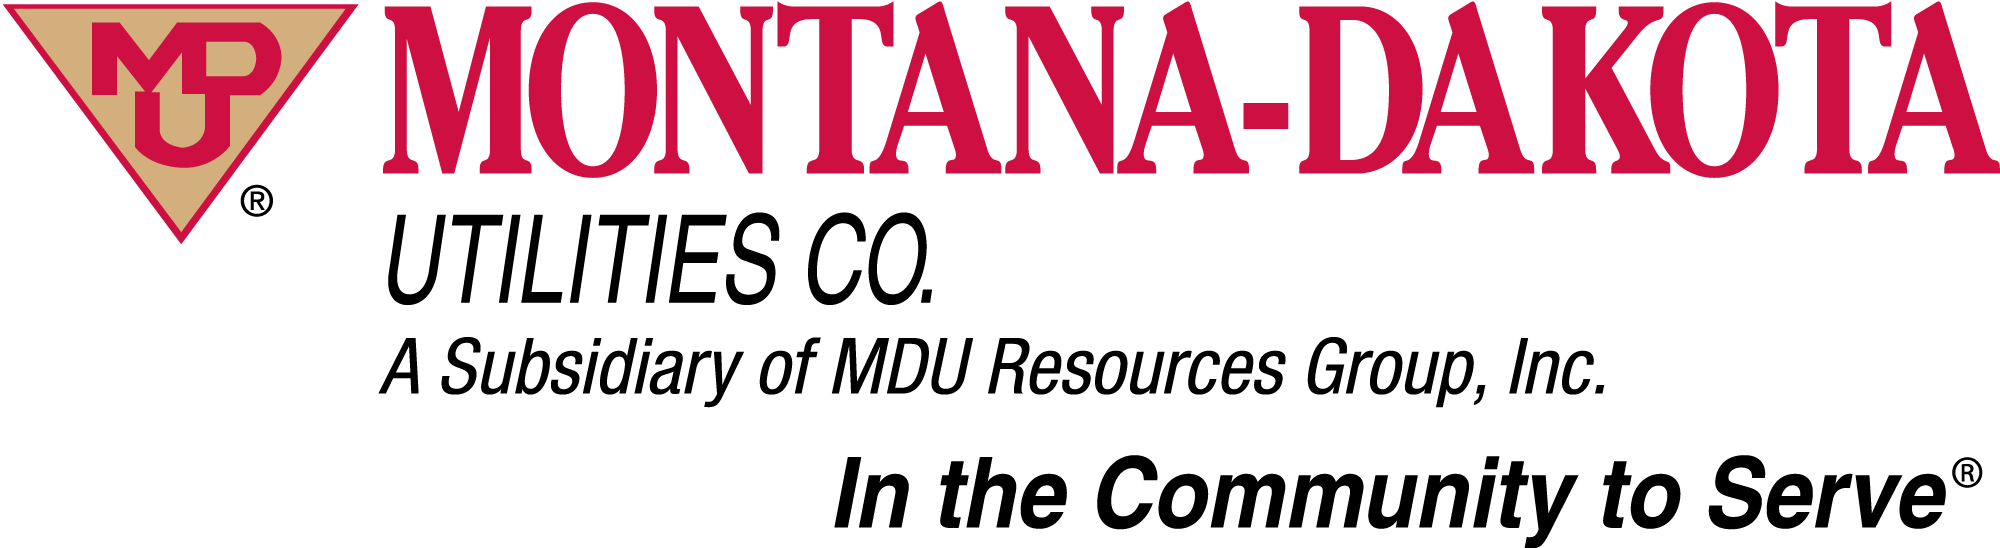 Montana Dakota Utilities Cooperative logo